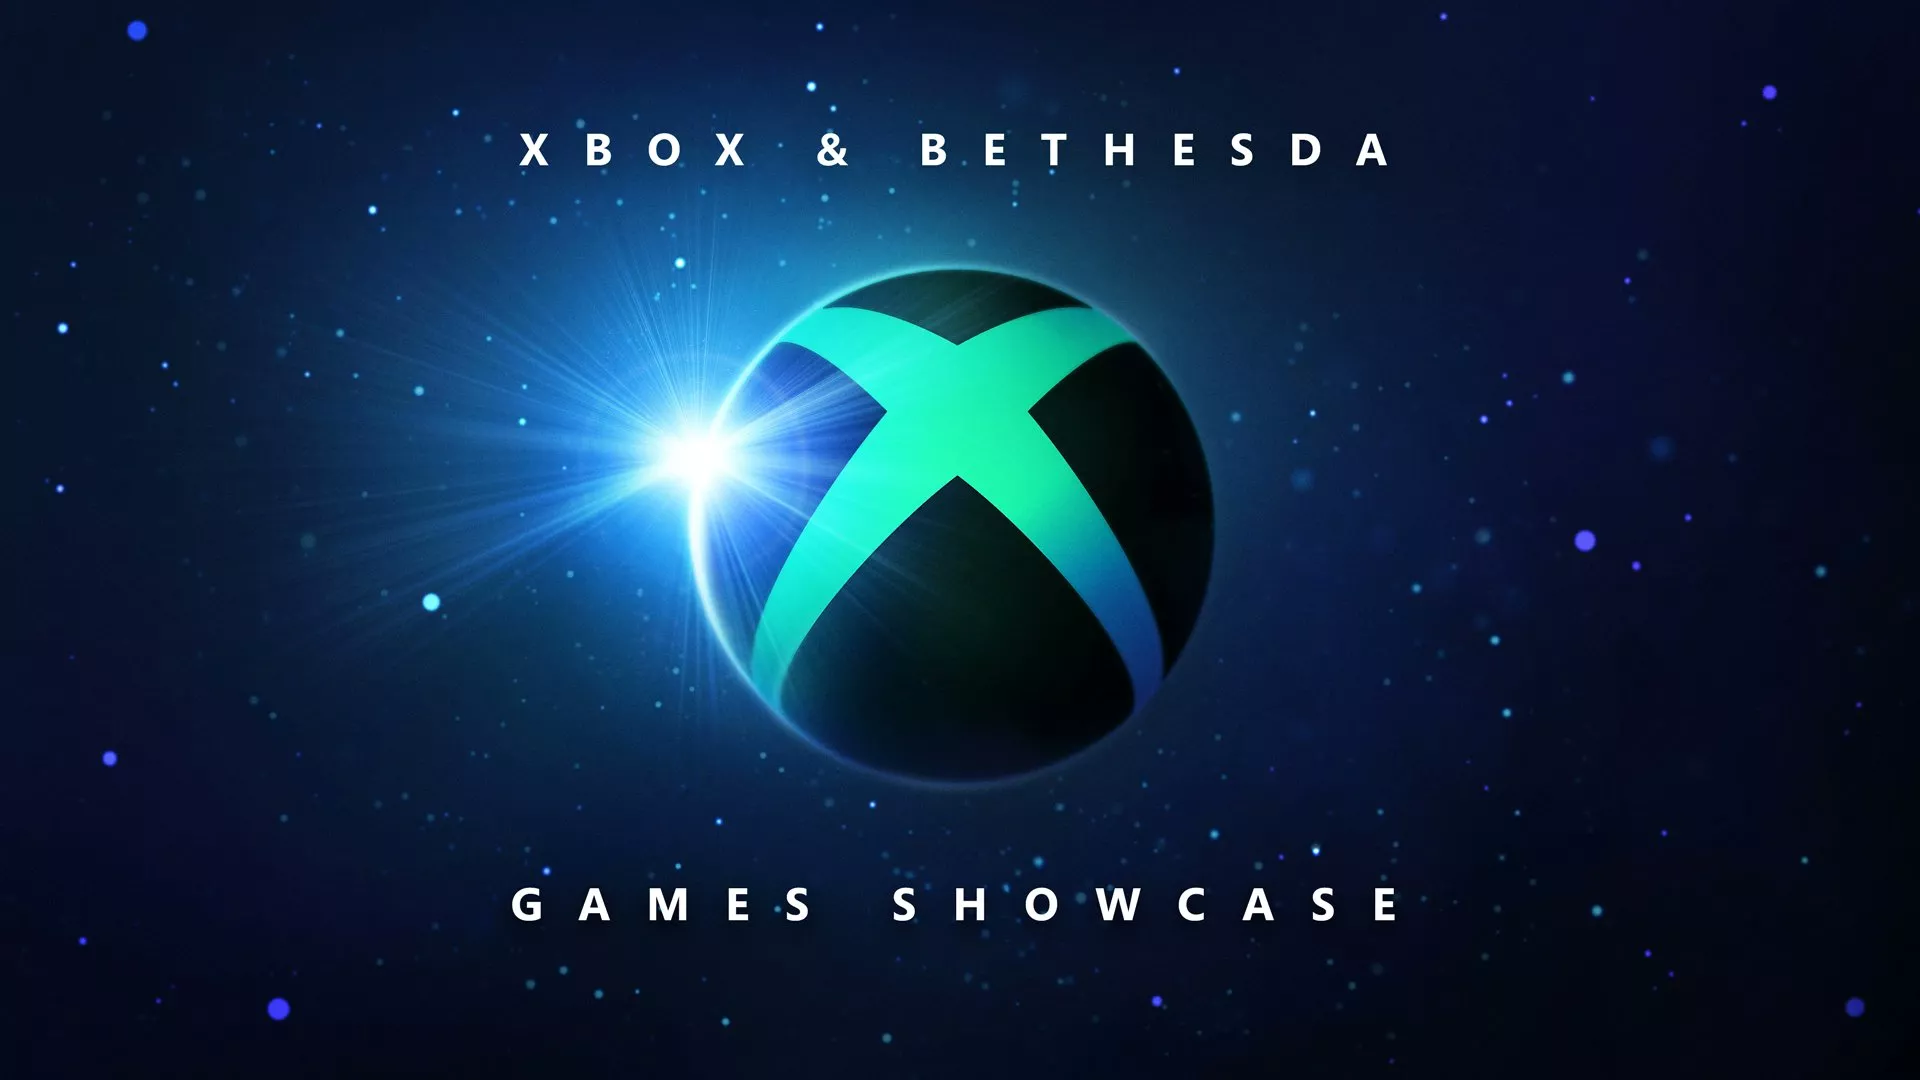 Xbox & Bethesda Games Showcase: Extended Show angekündigt Heropic